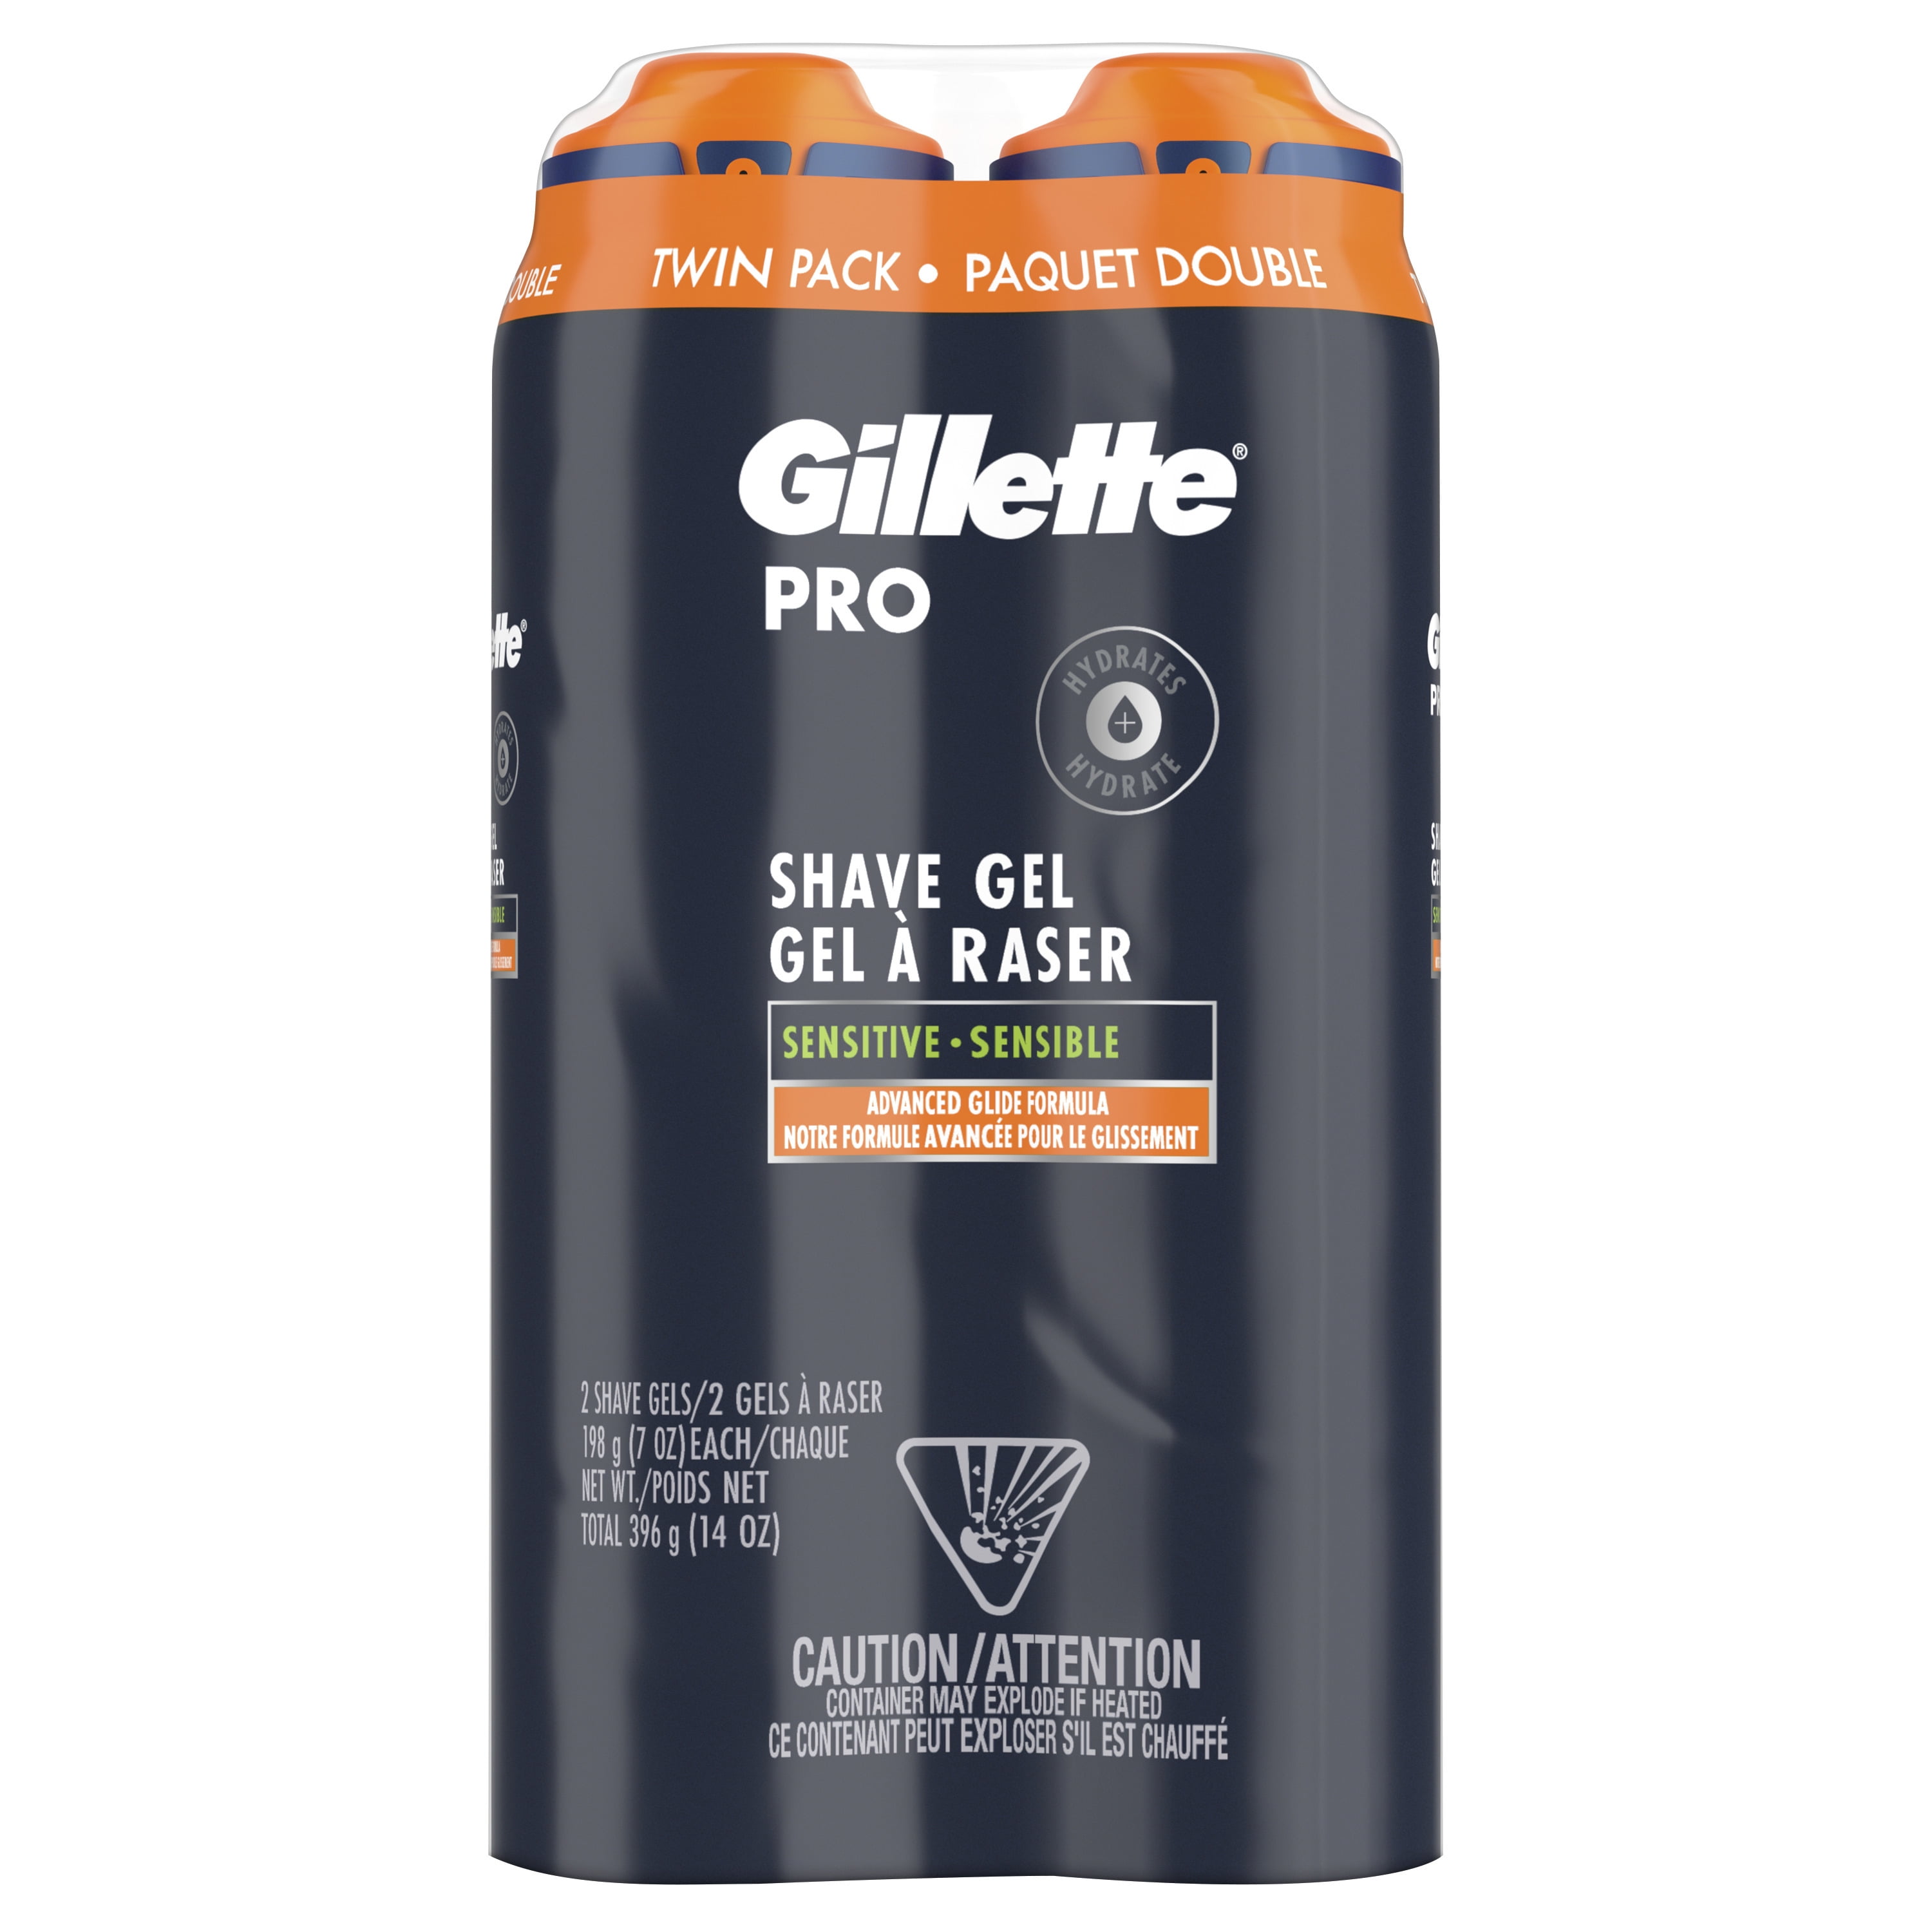 Gillette Pro Shaving Gel Twin Pack